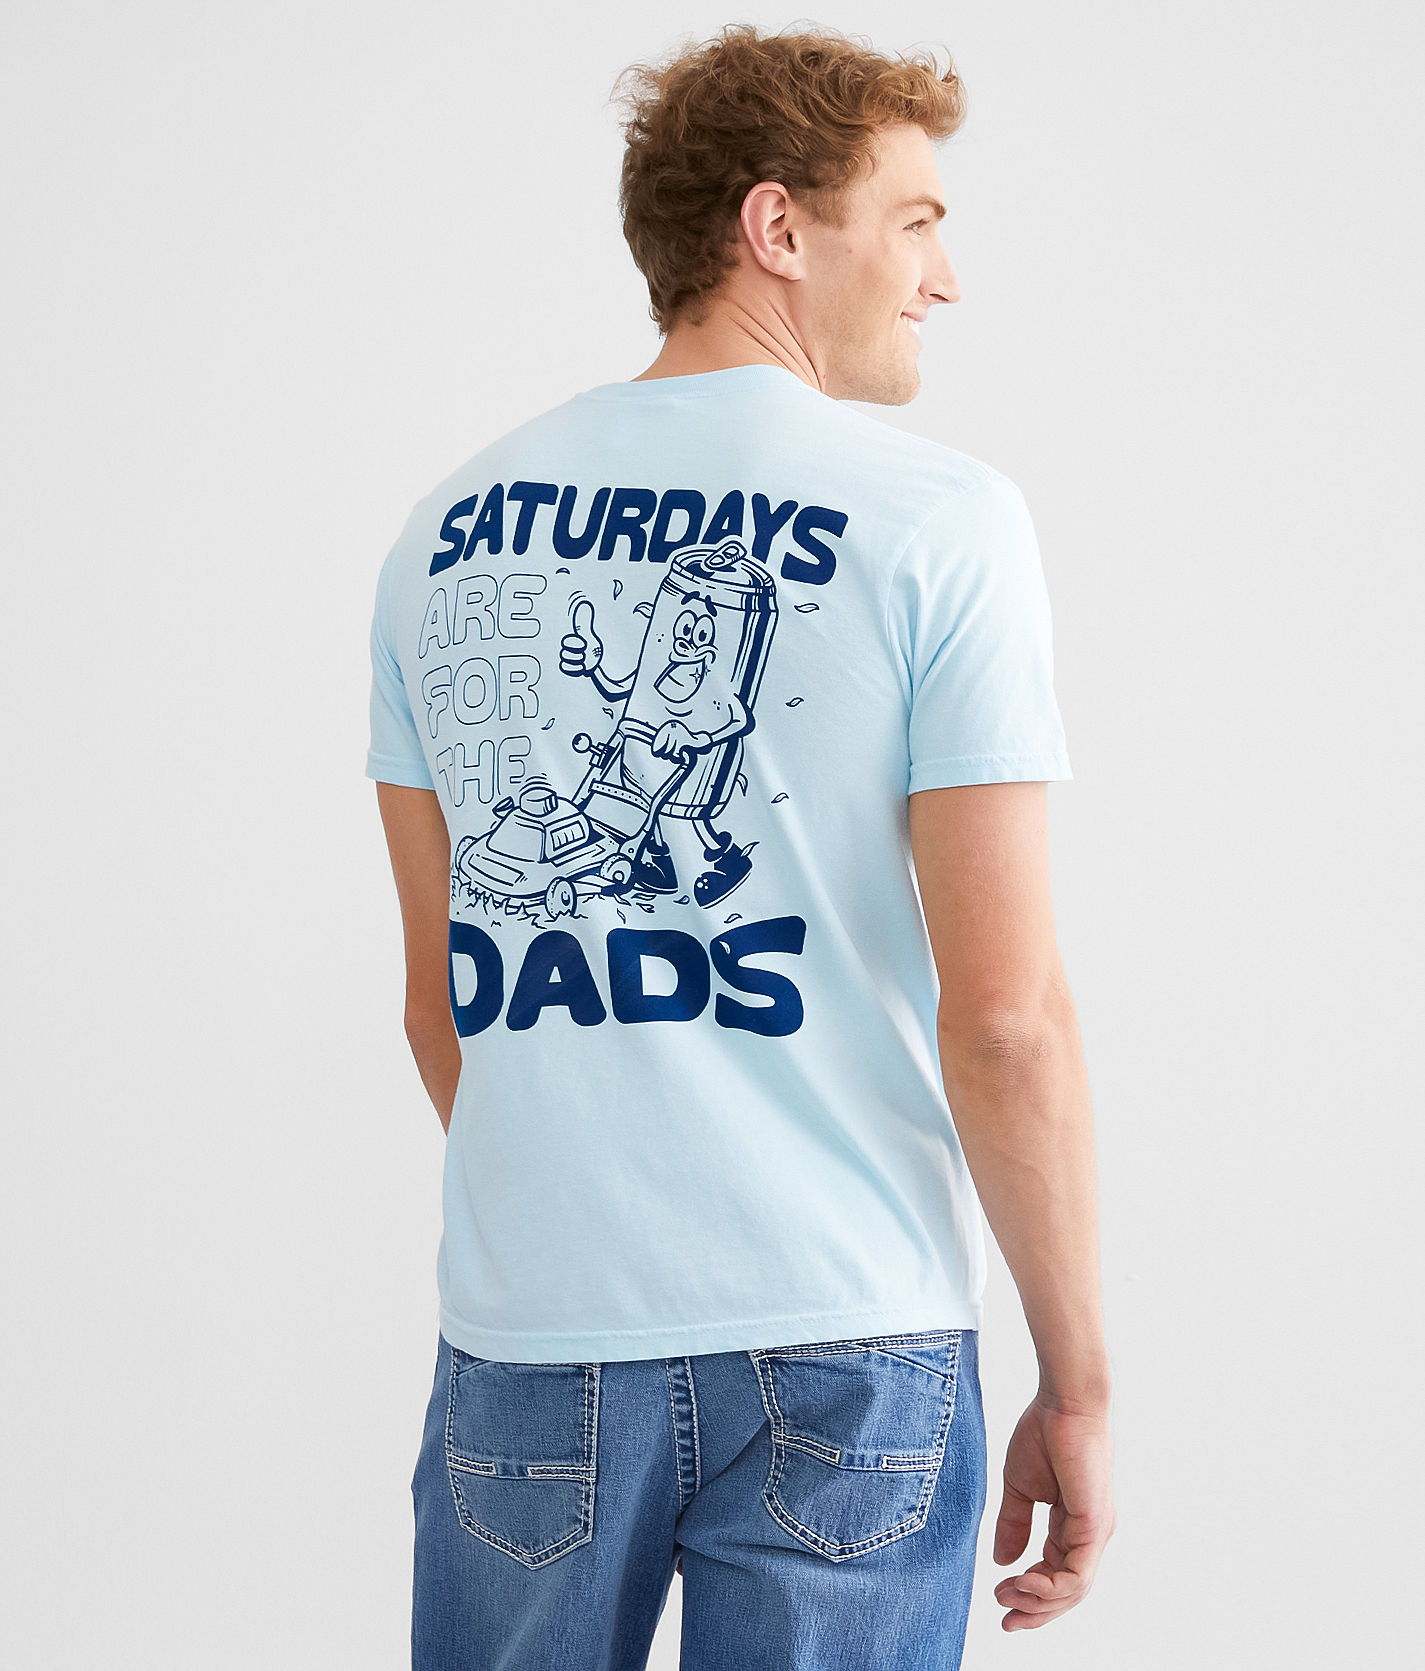 SAFTB Saturdays Are for The Dads II Tee | Barstool Sports Black